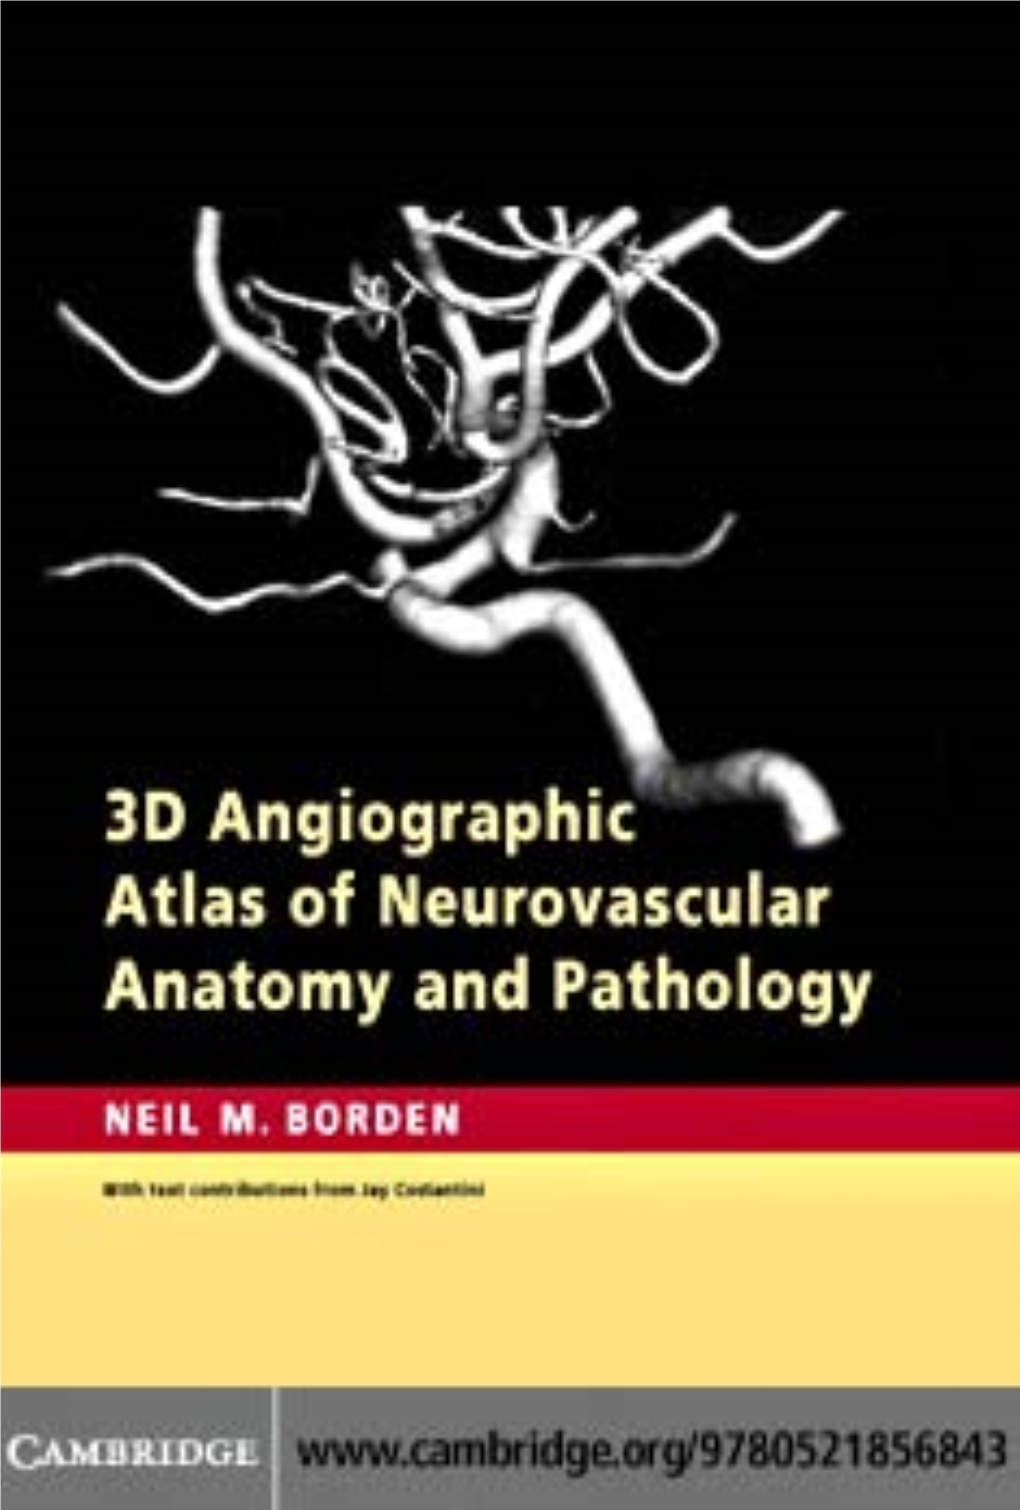 3D Angiographic Atlas of Neurovascular Anatomy